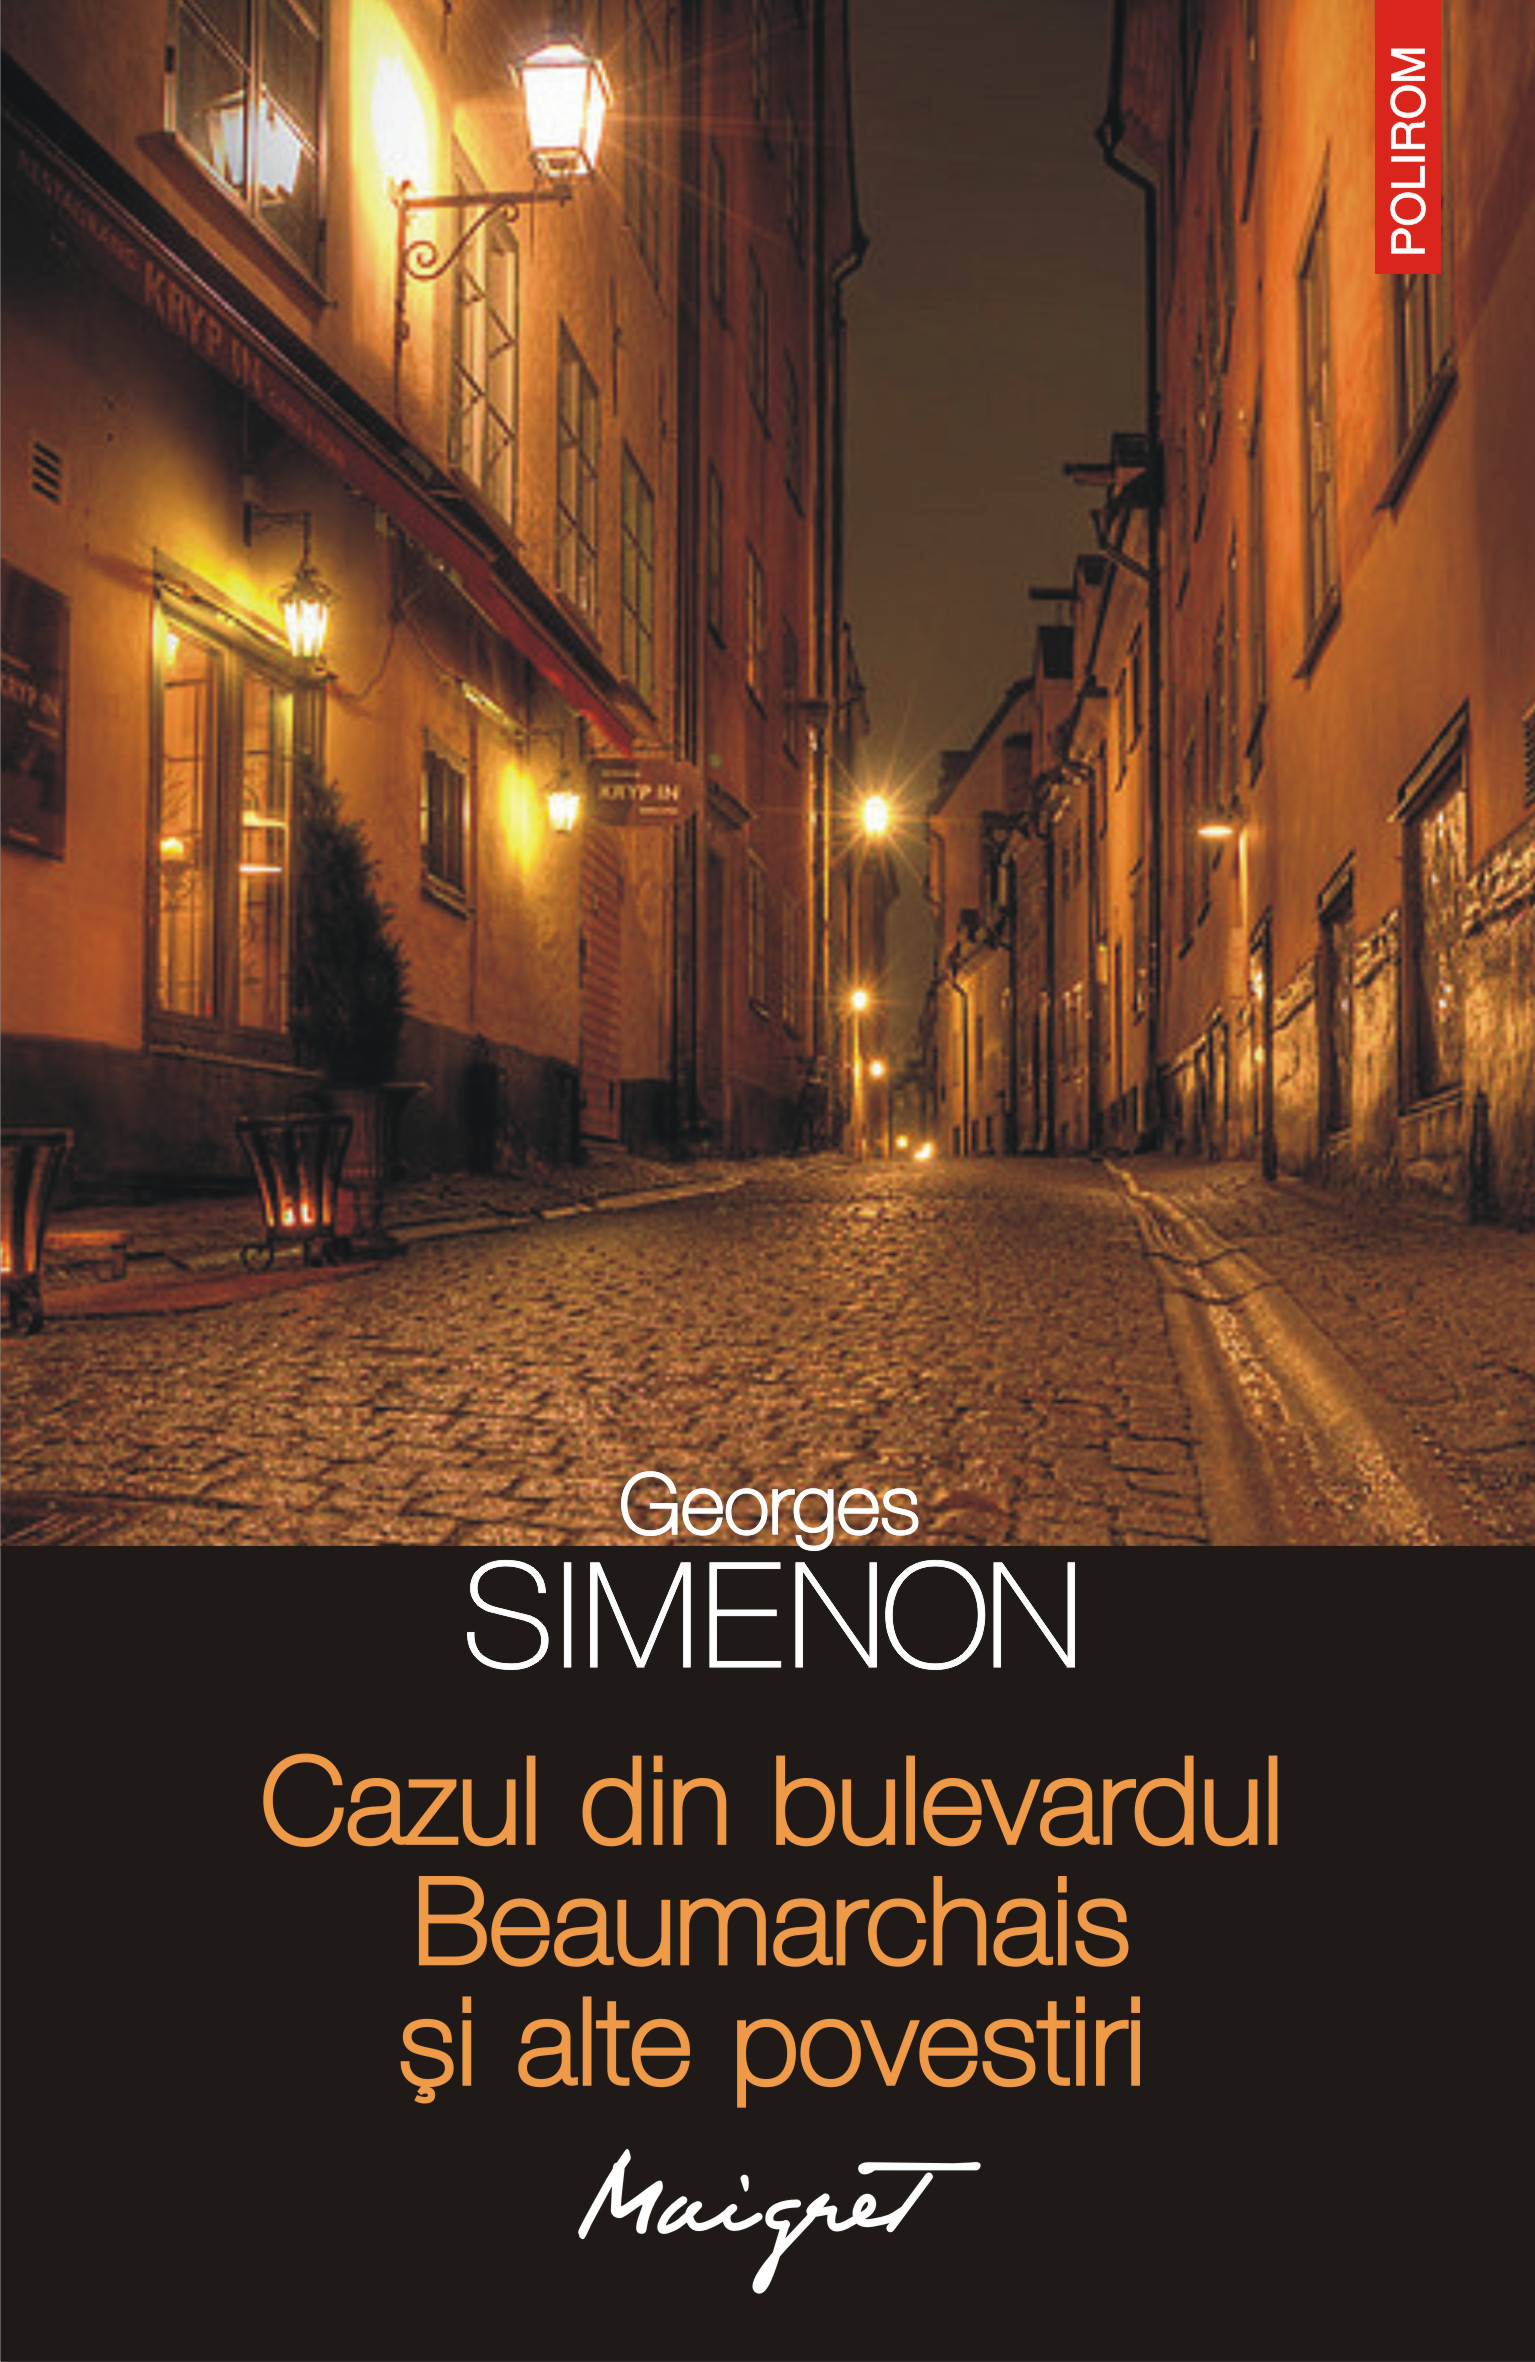 eBook Cazul din bulevardul Beaumarchais si alte povestiri - Georges Simenon